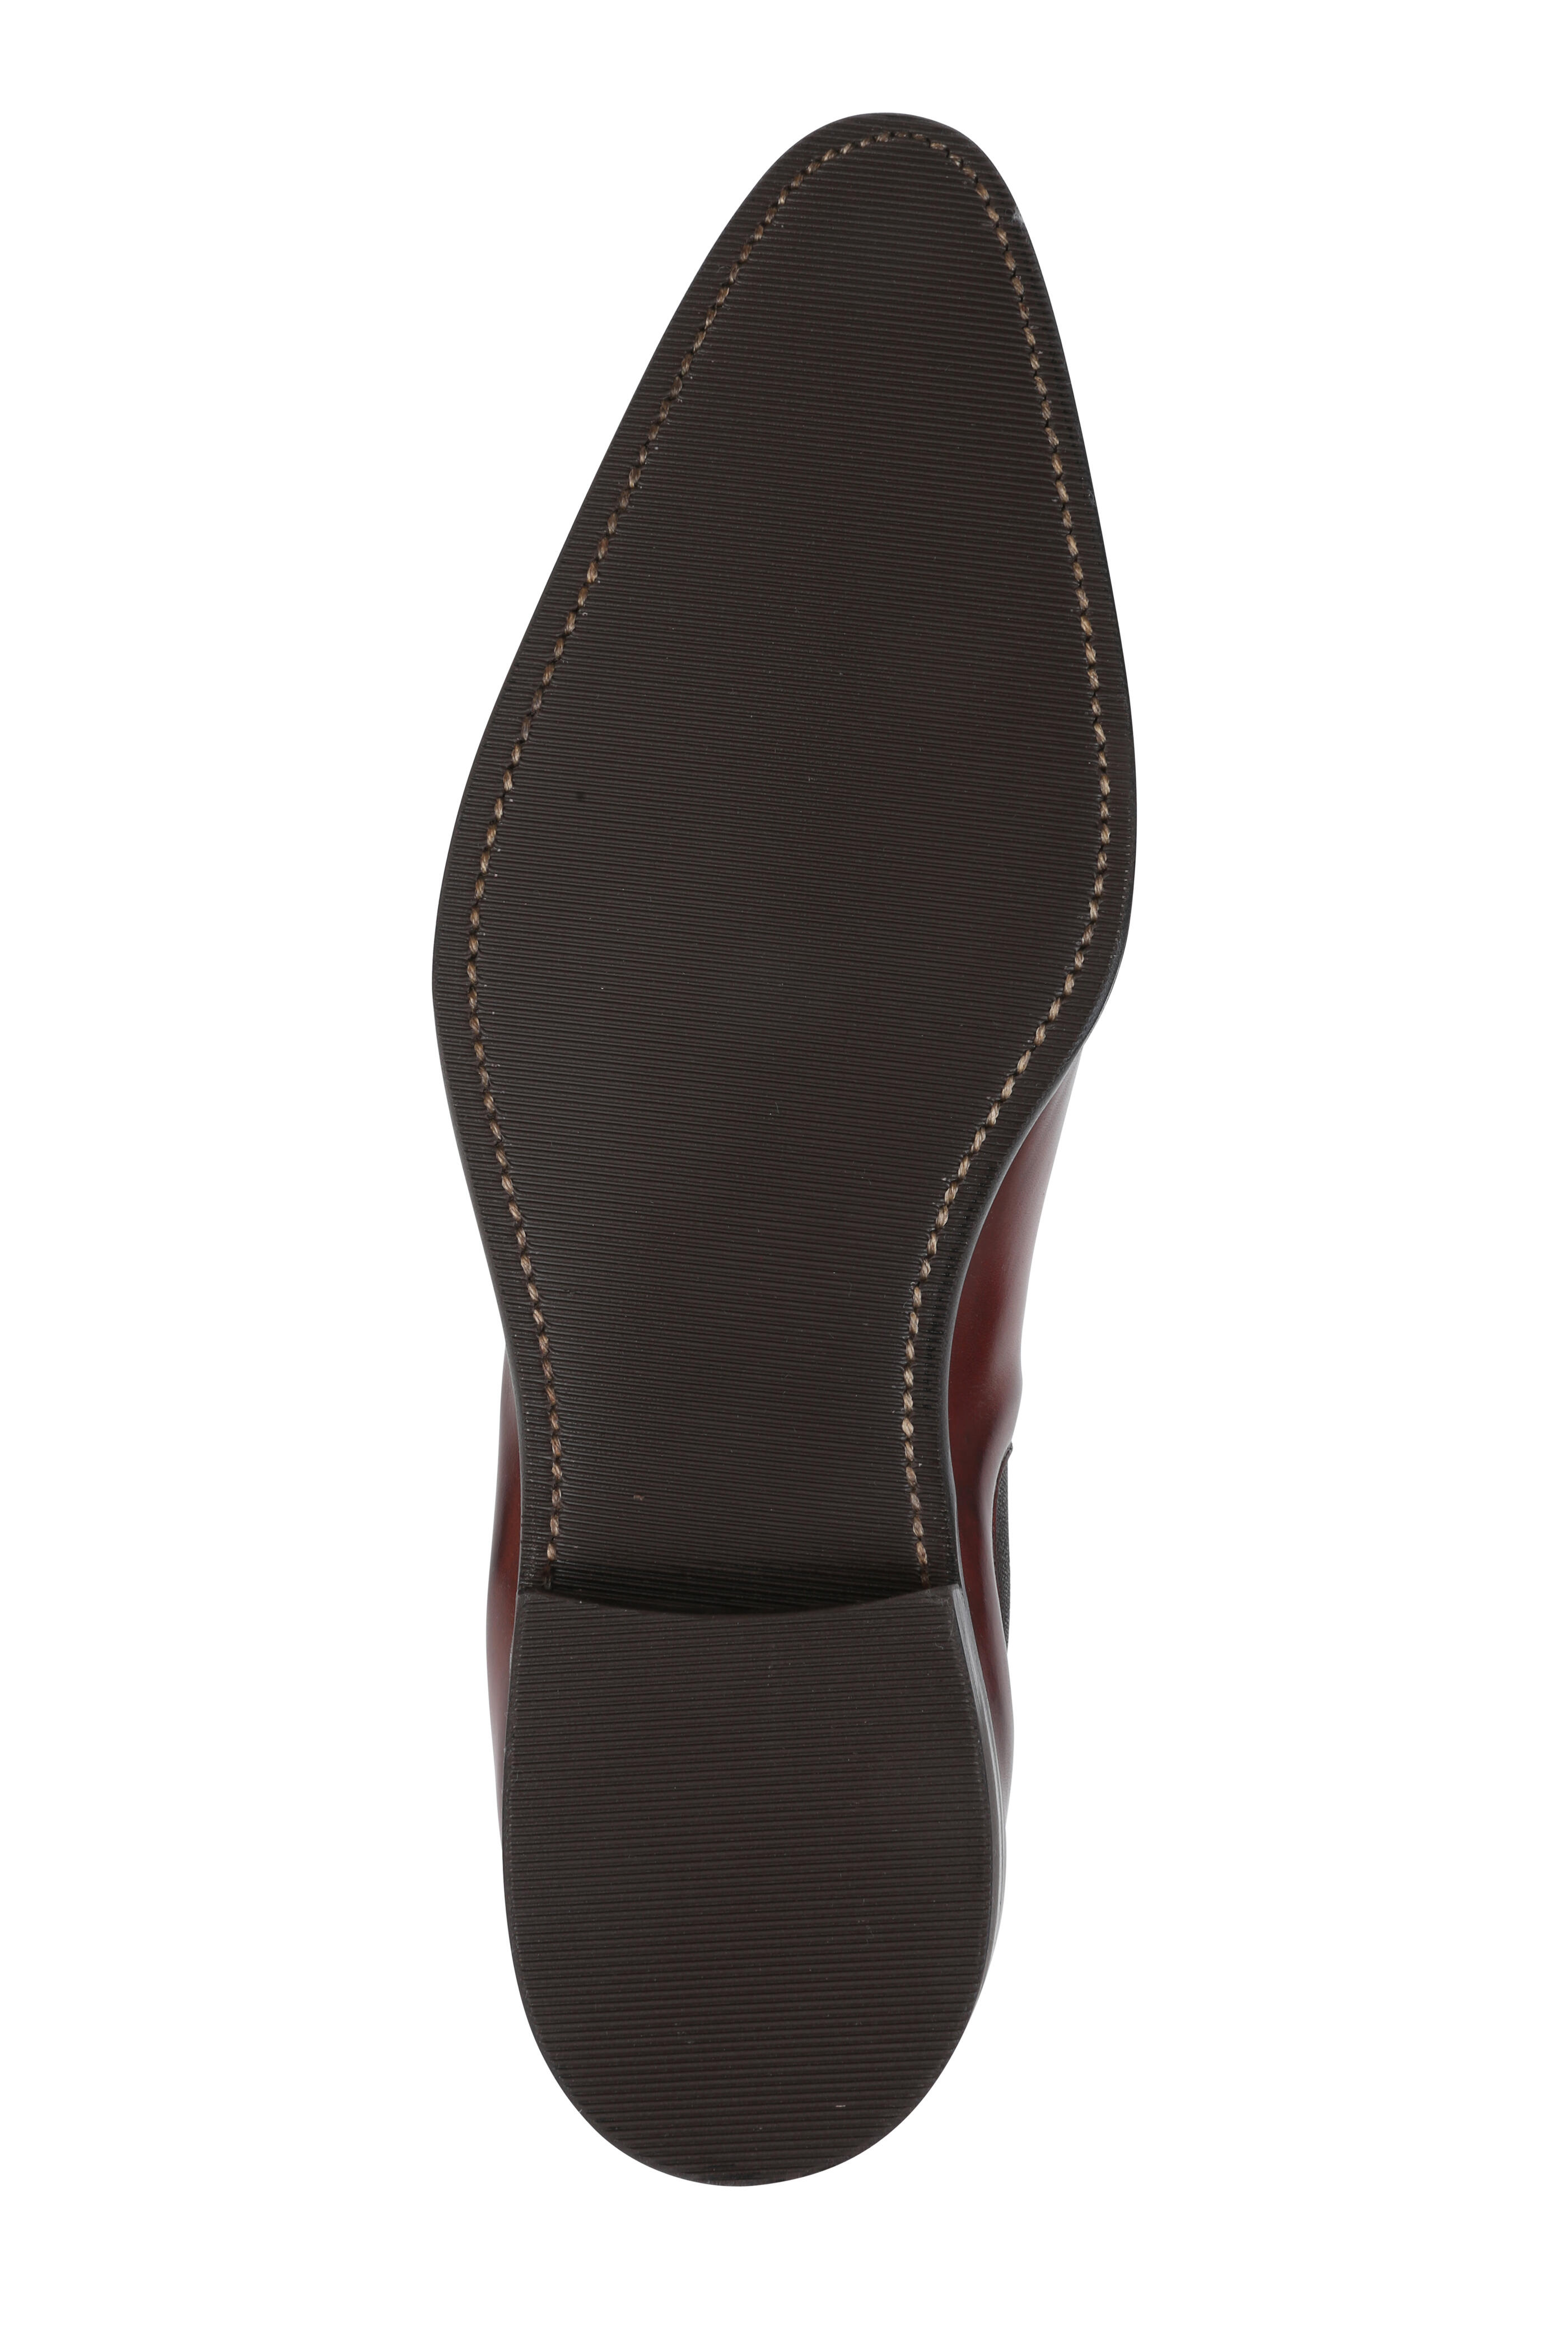 Gaziano & Girling - Burnham Cognac Leather Chelsea Boot